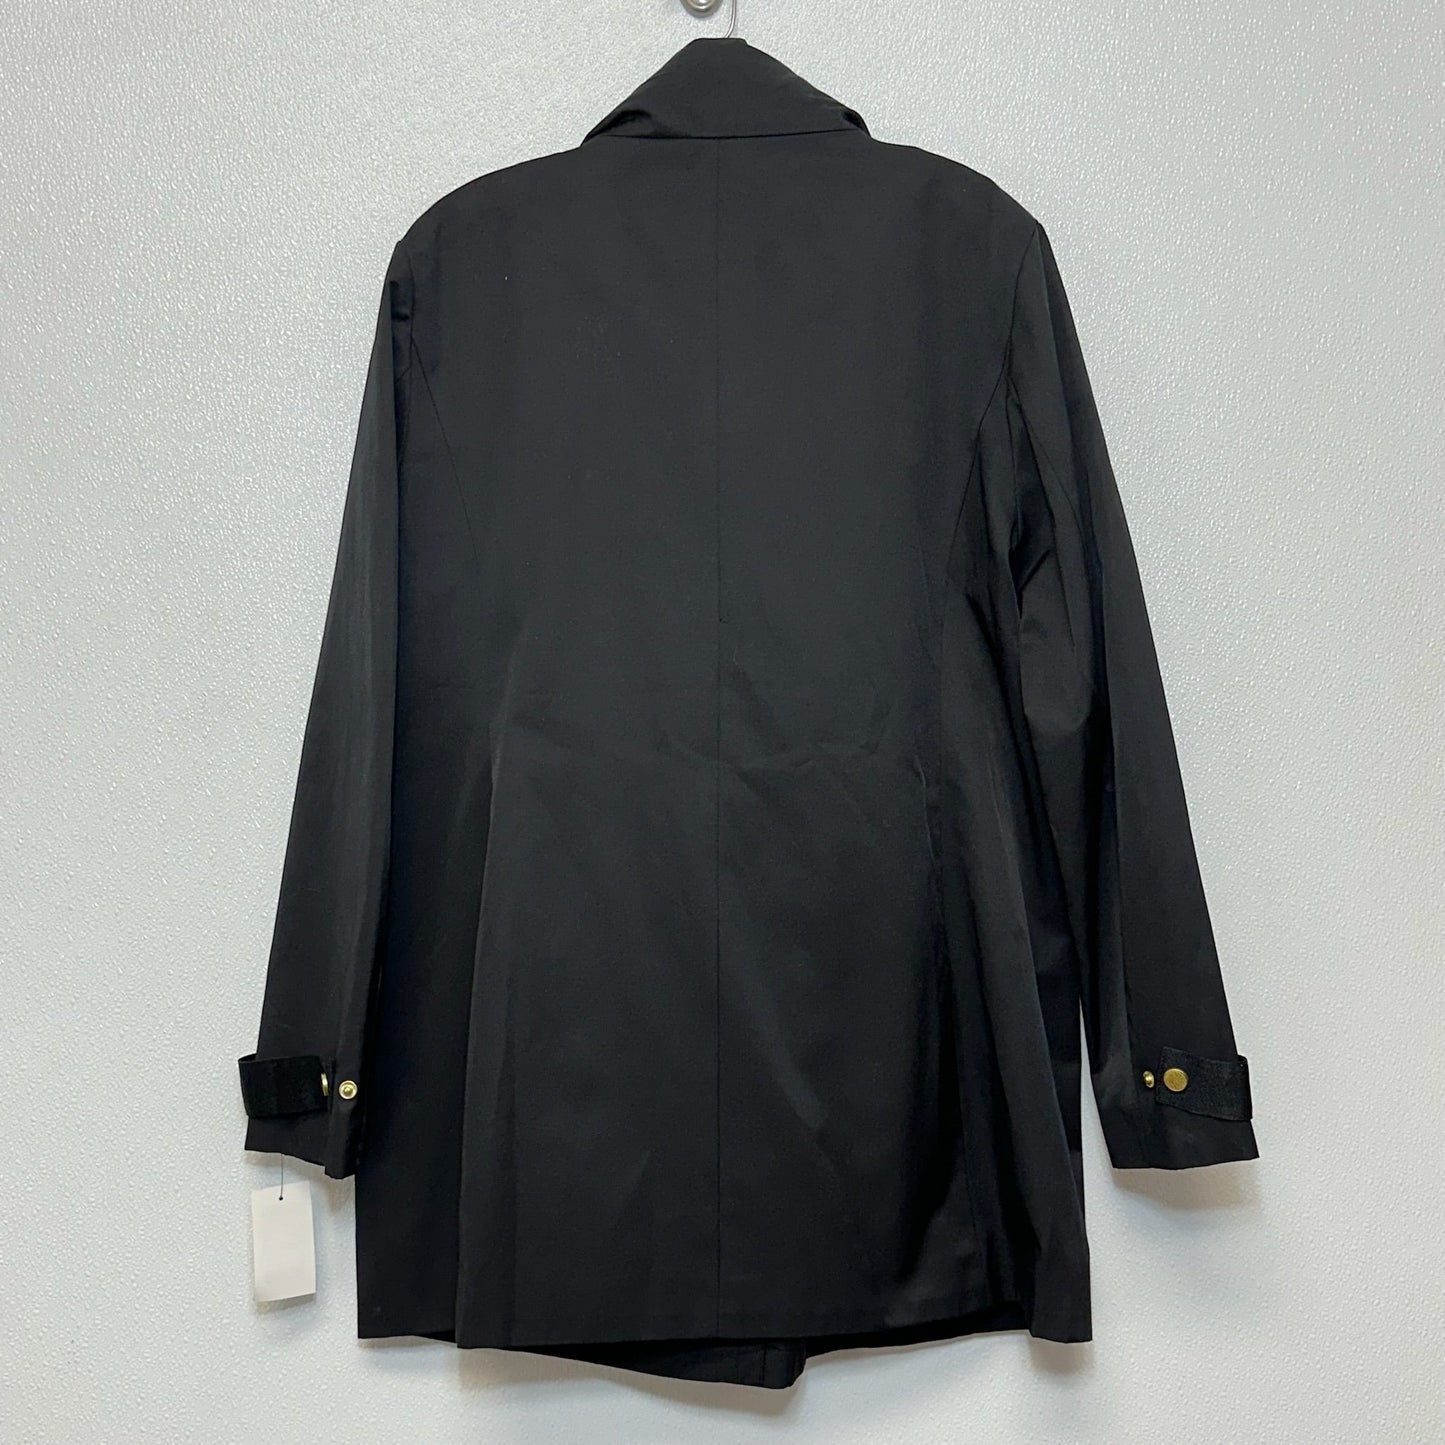 Black Coat Designer Cole-haan O, Size Xl